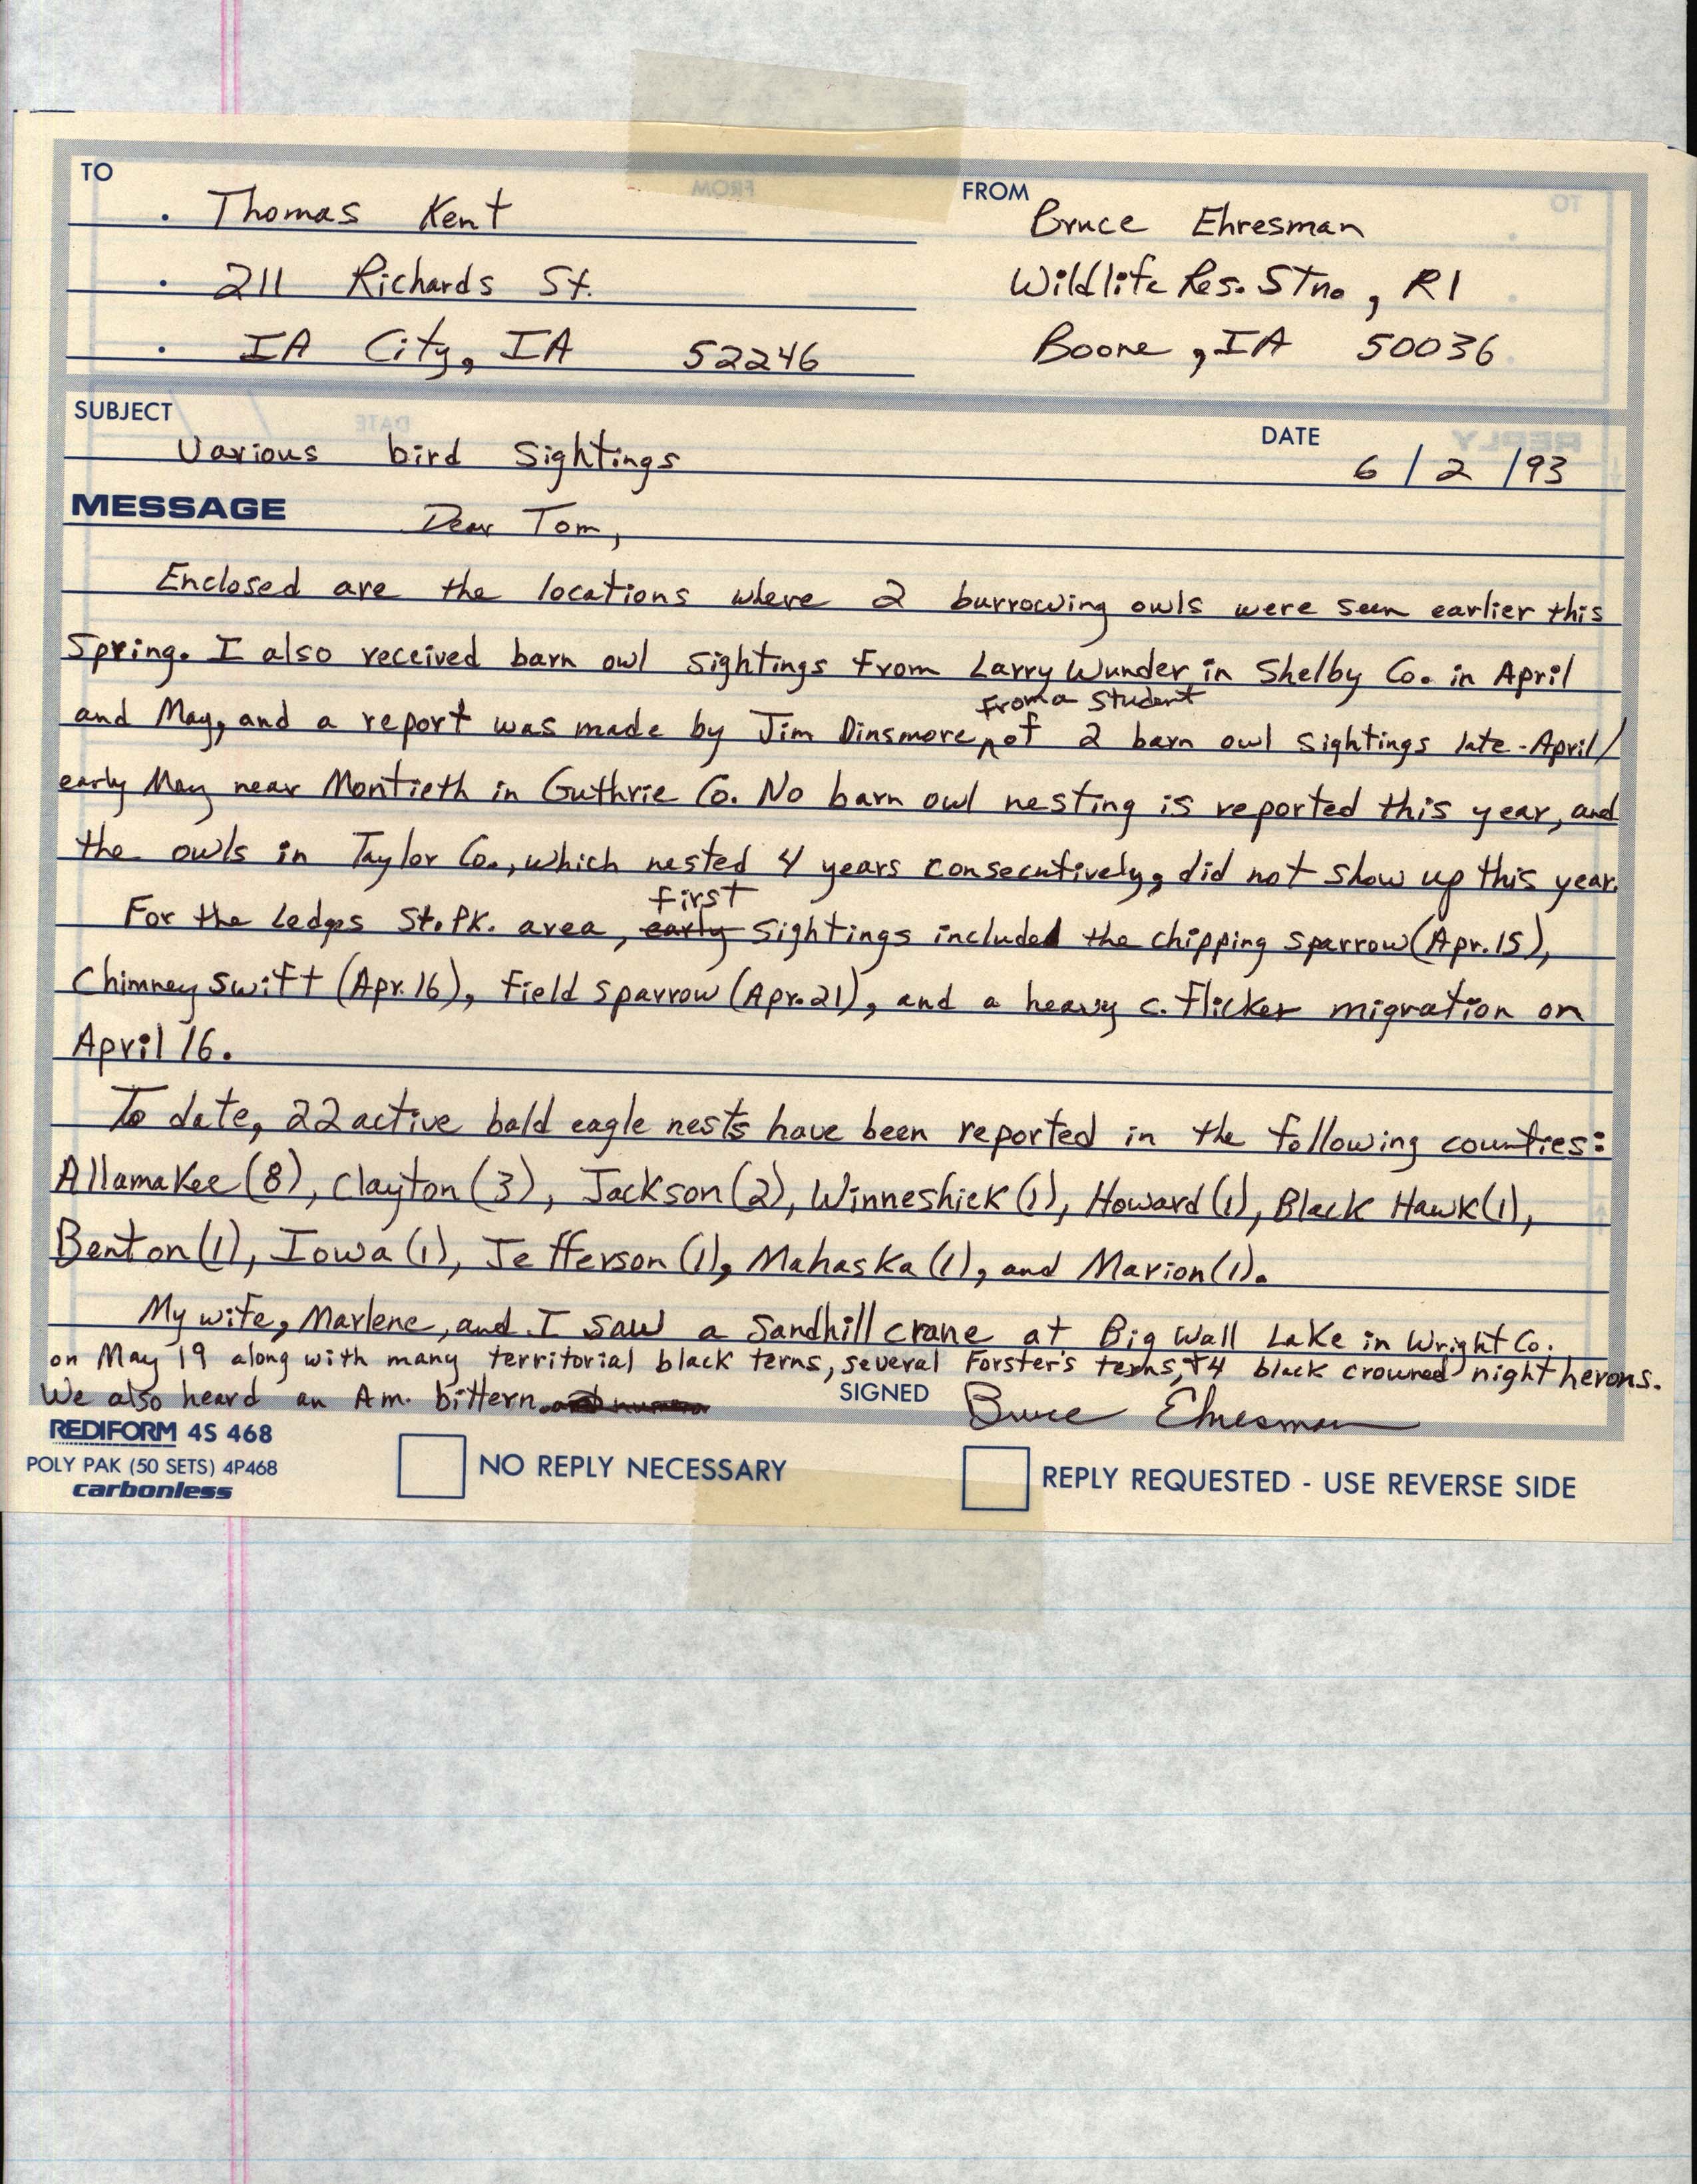 Bruce Ehresman letter to Thomas Kent regarding Burrowing Owl sightings, June 2, 1993